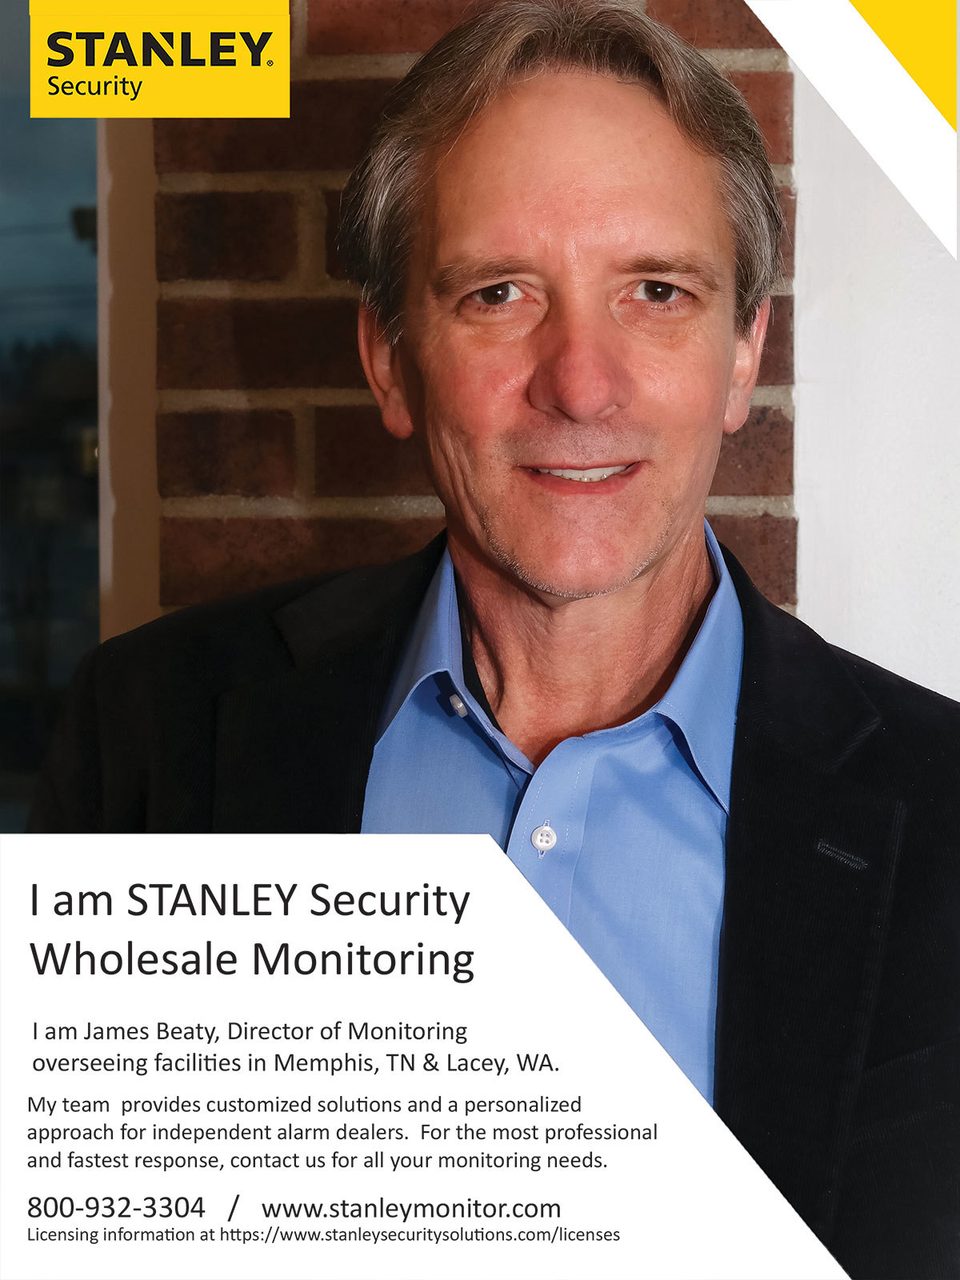 Stanley Security advertisement